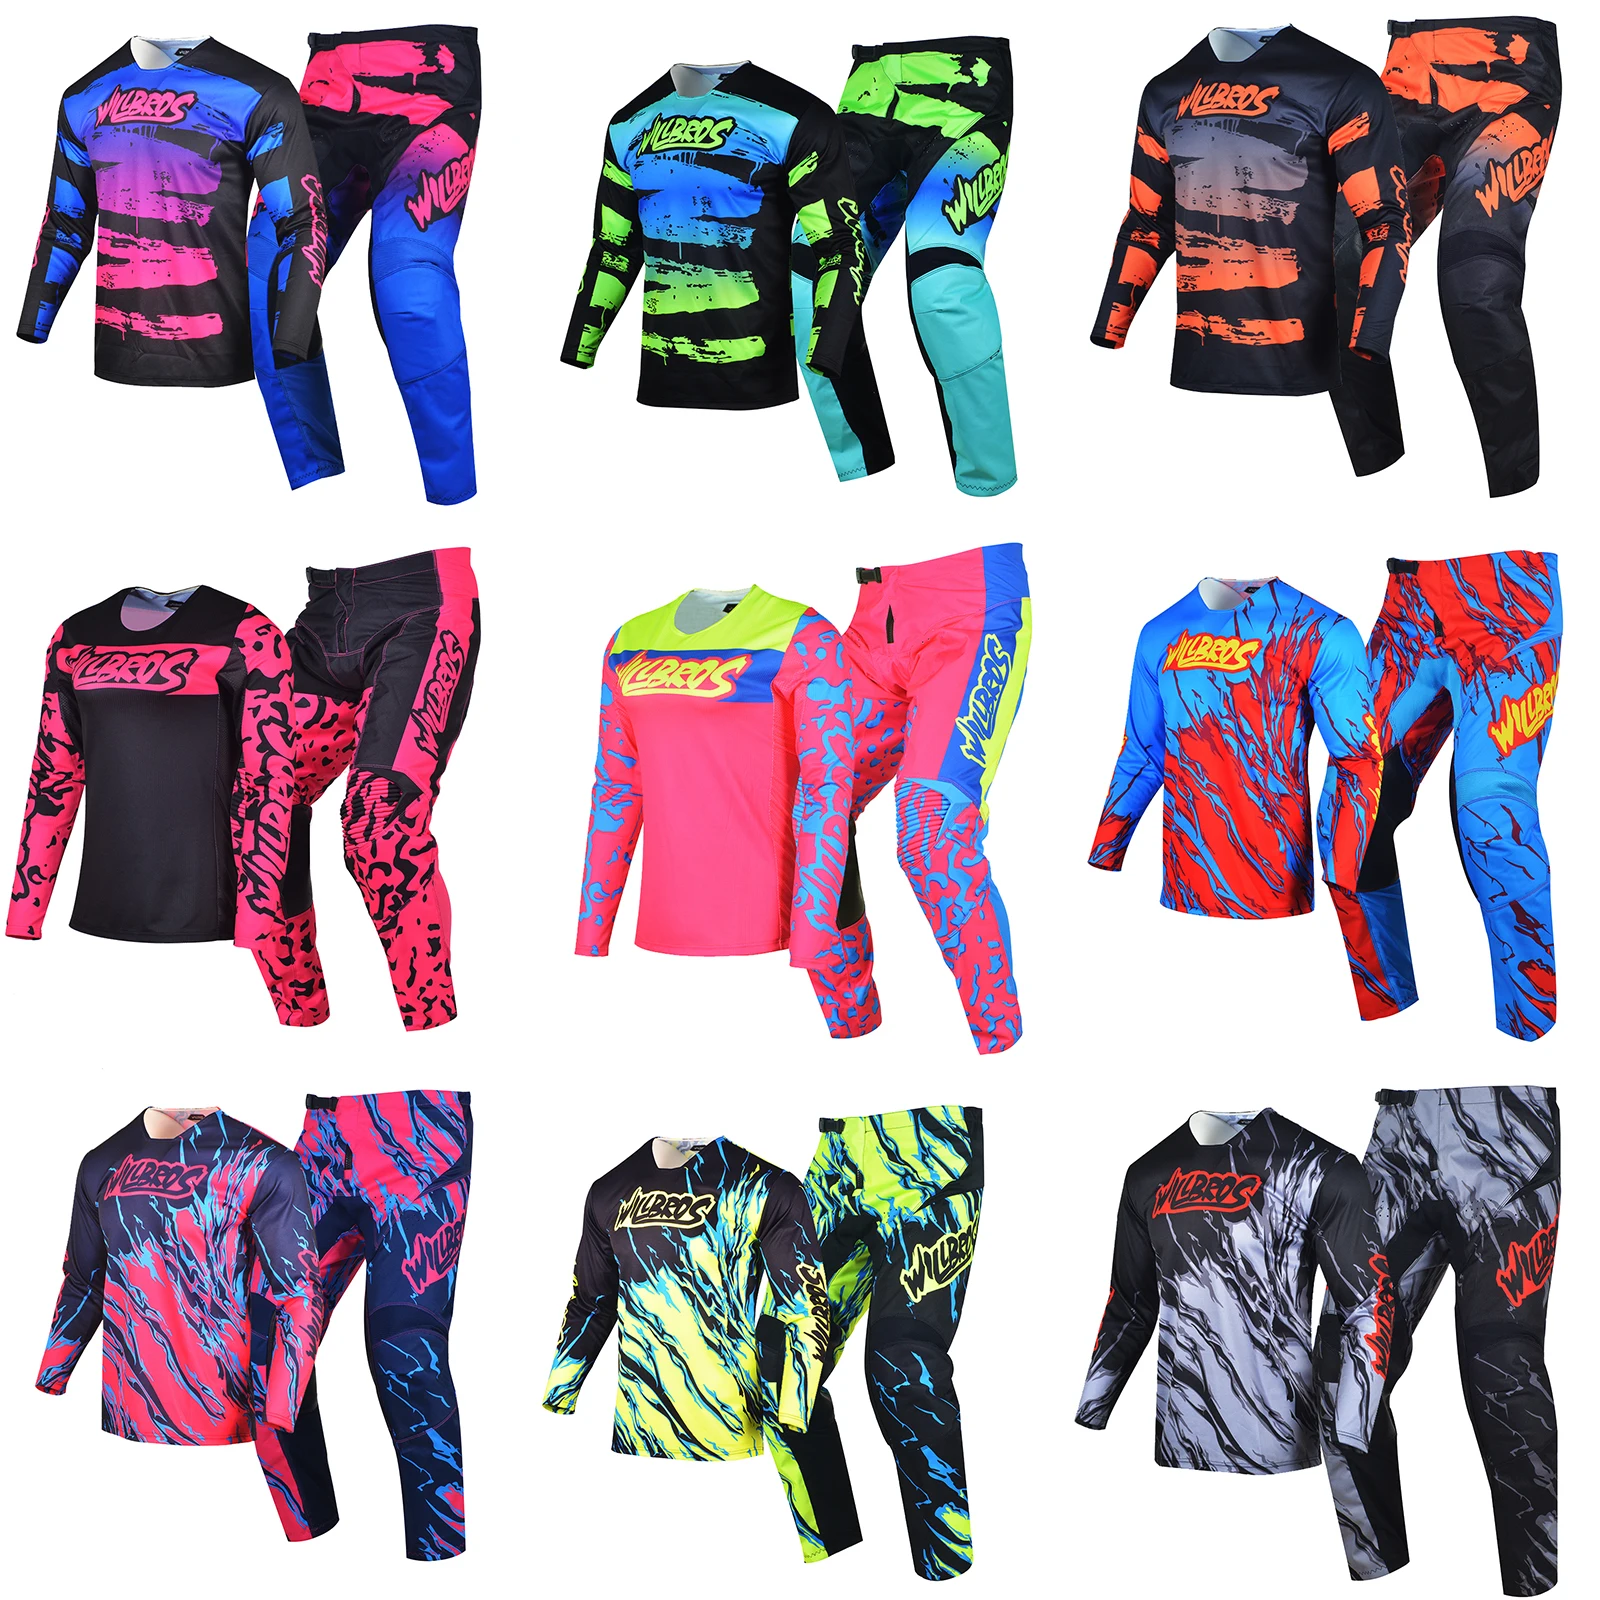 

Enduro Jersey Pants MX Combo Motocross Gear Set Outfit Downhill Bike Suit Off-Road Willbros ATV DH MTB UTV Bicycle Race Kits Men